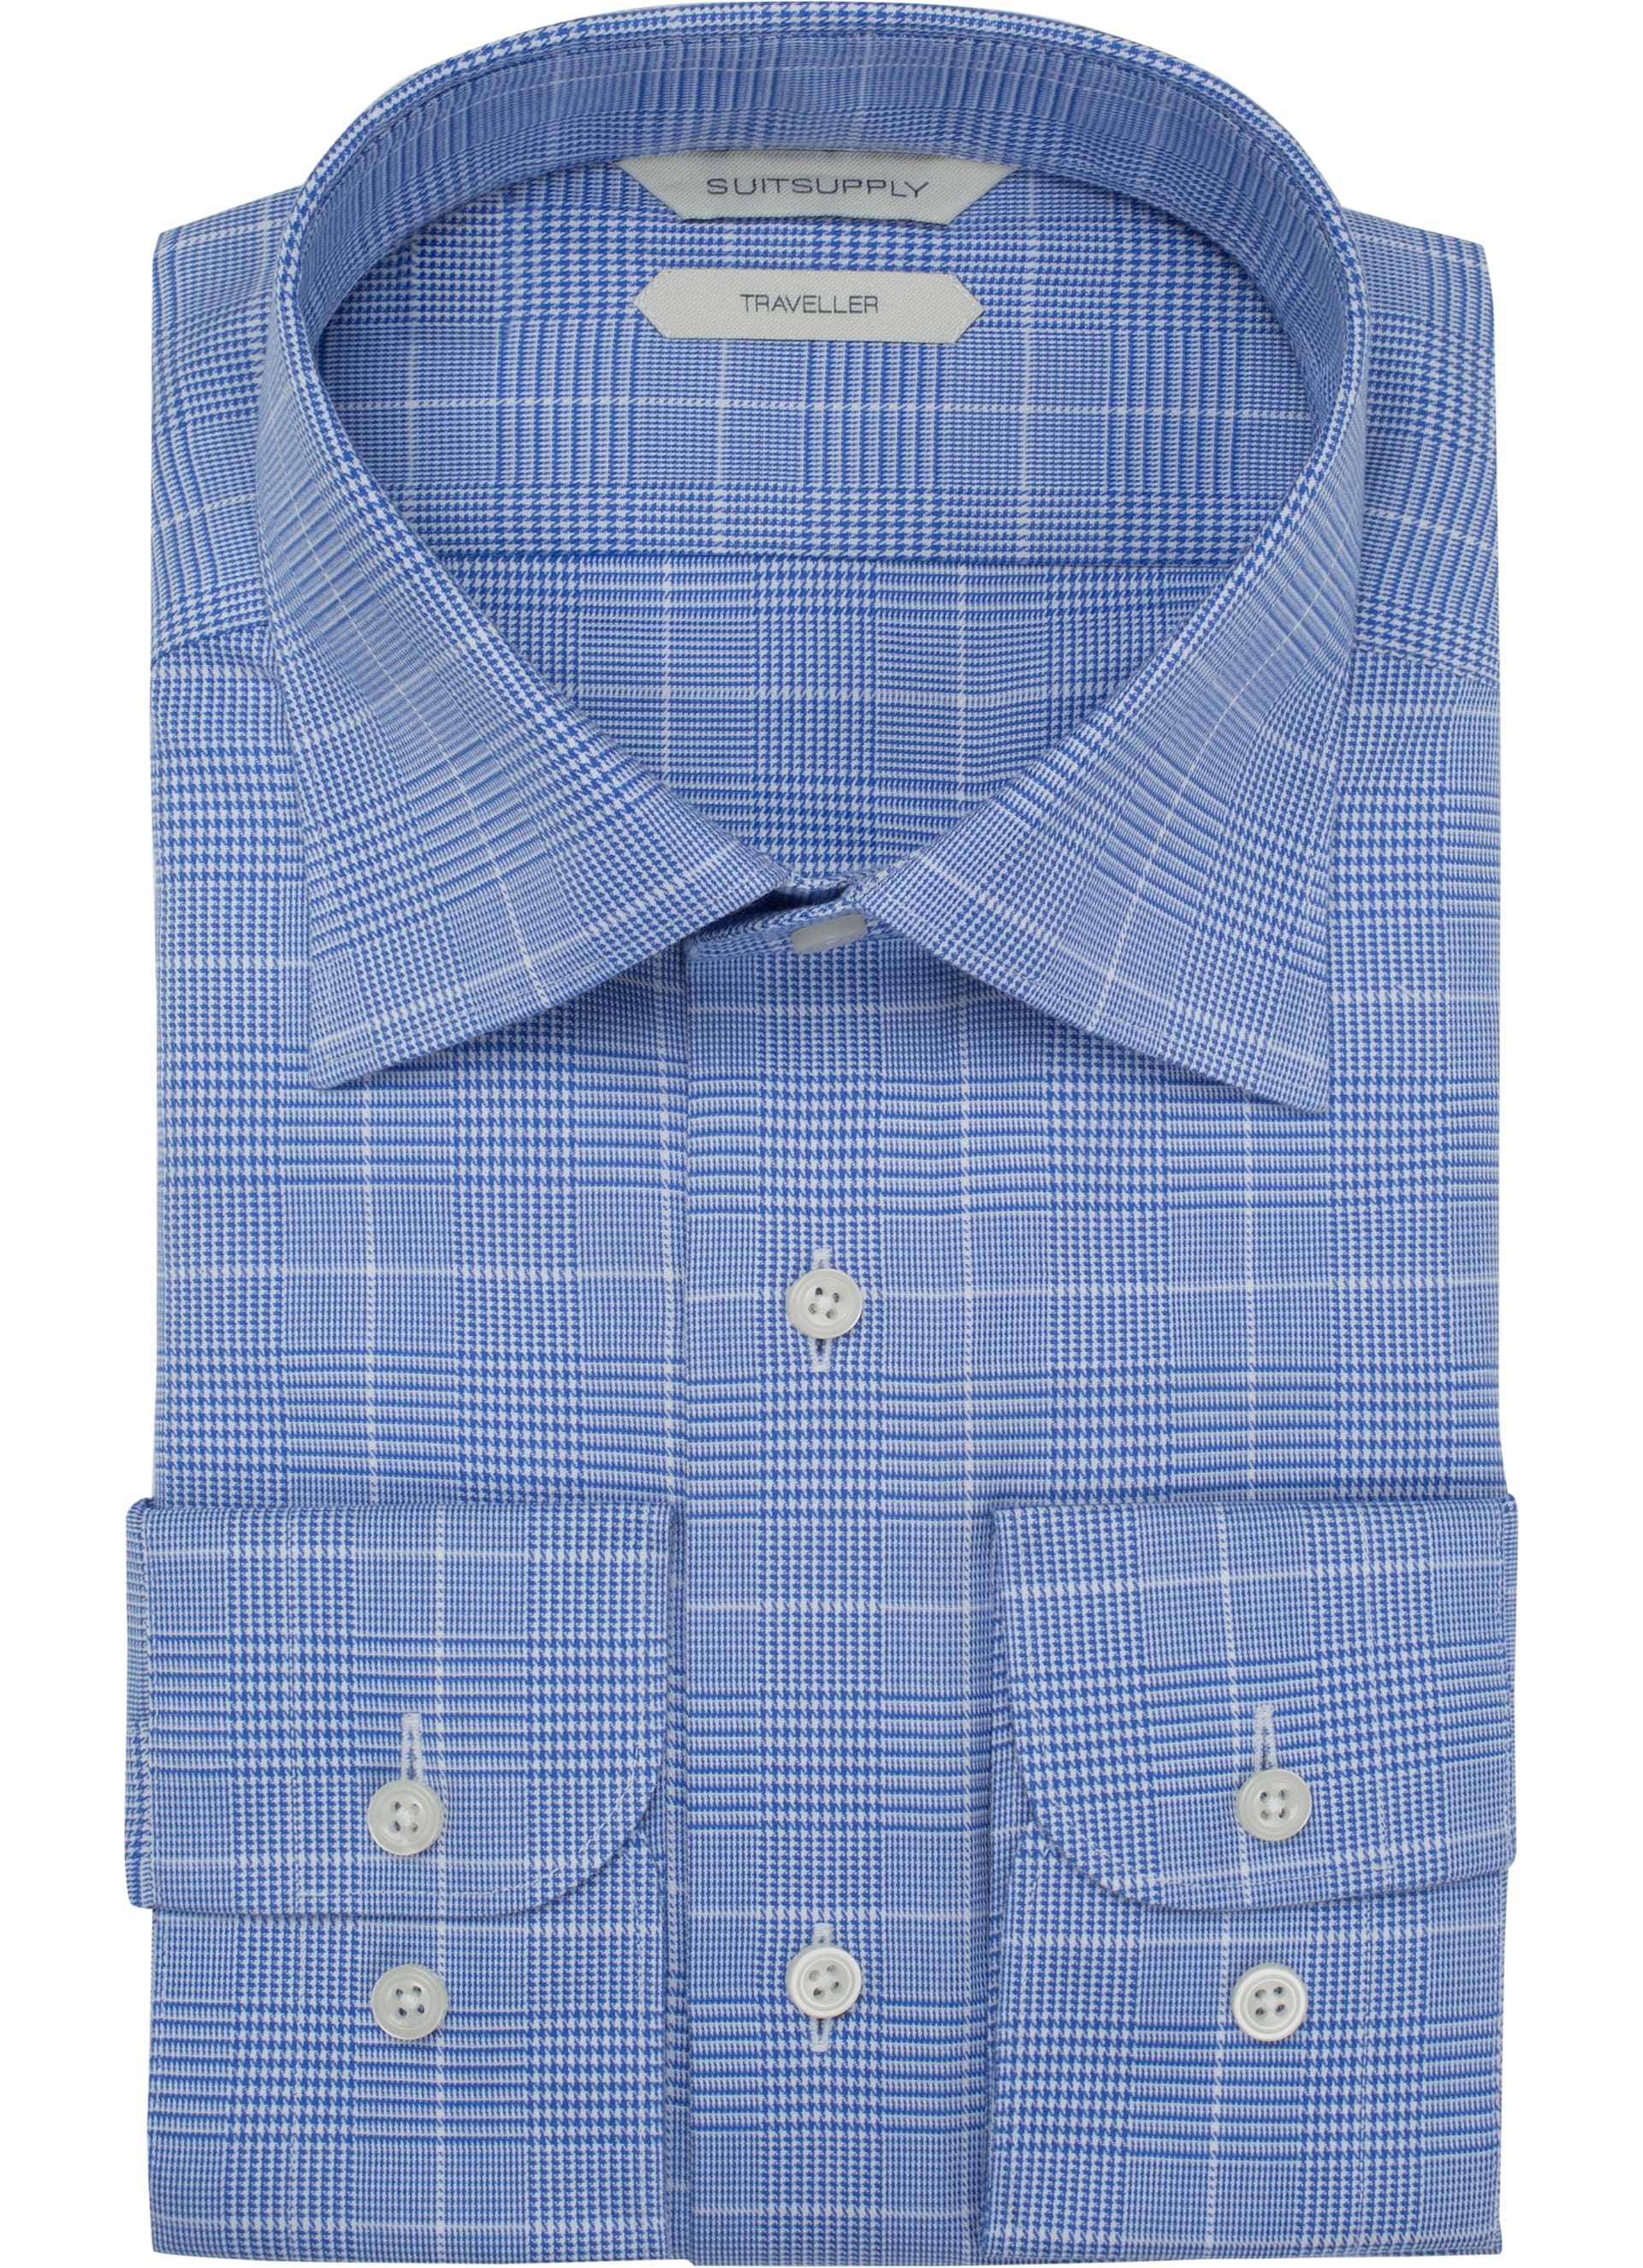 Blue Check Traveller Shirt Single Cuff H5791u | Suitsupply Online Store